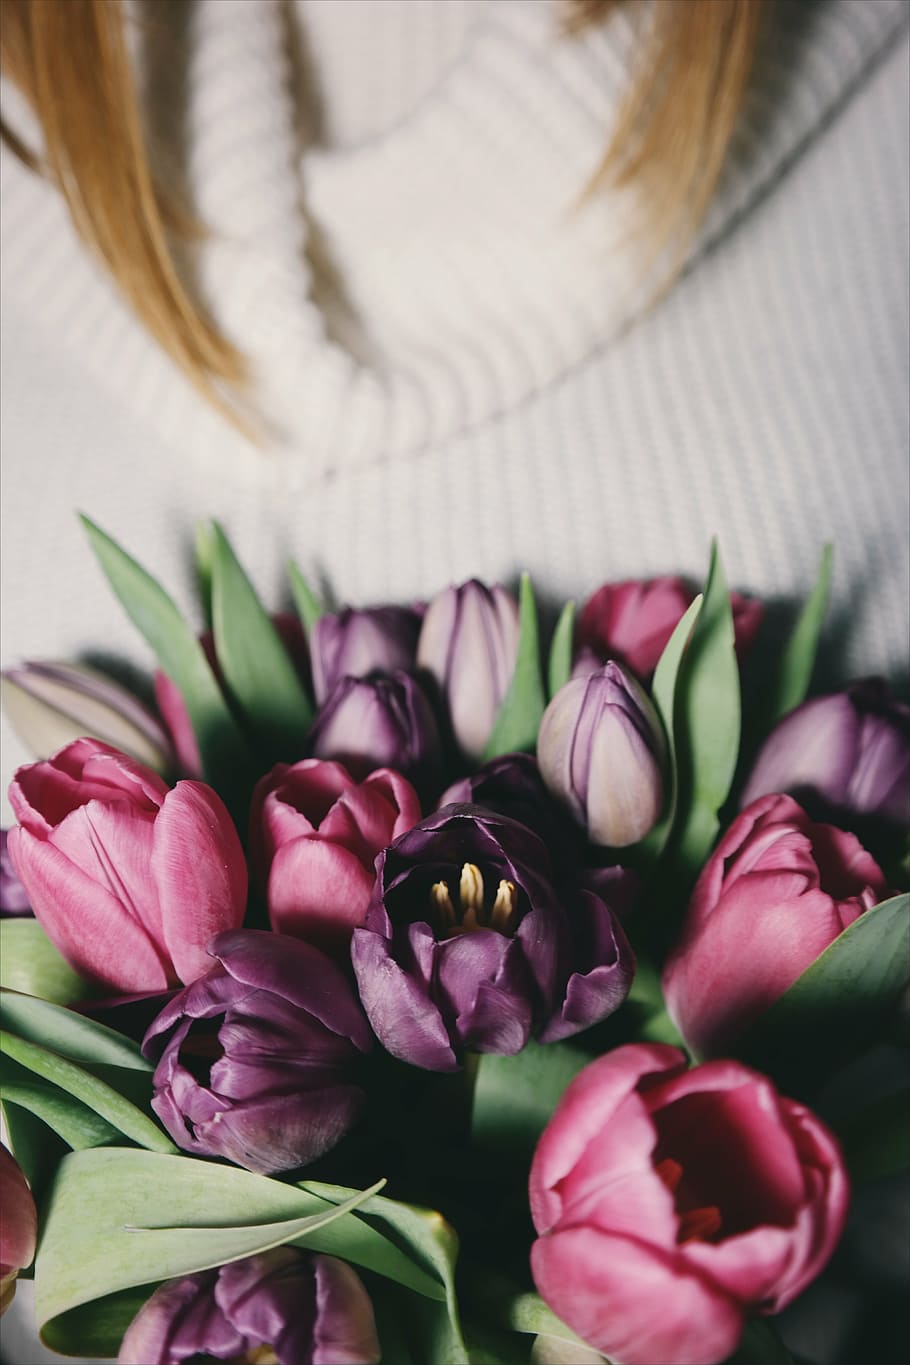 mujer, tenencia, rosado, púrpura, ramo de tulipanes, flor, violeta, pétalo, florecer, jardín